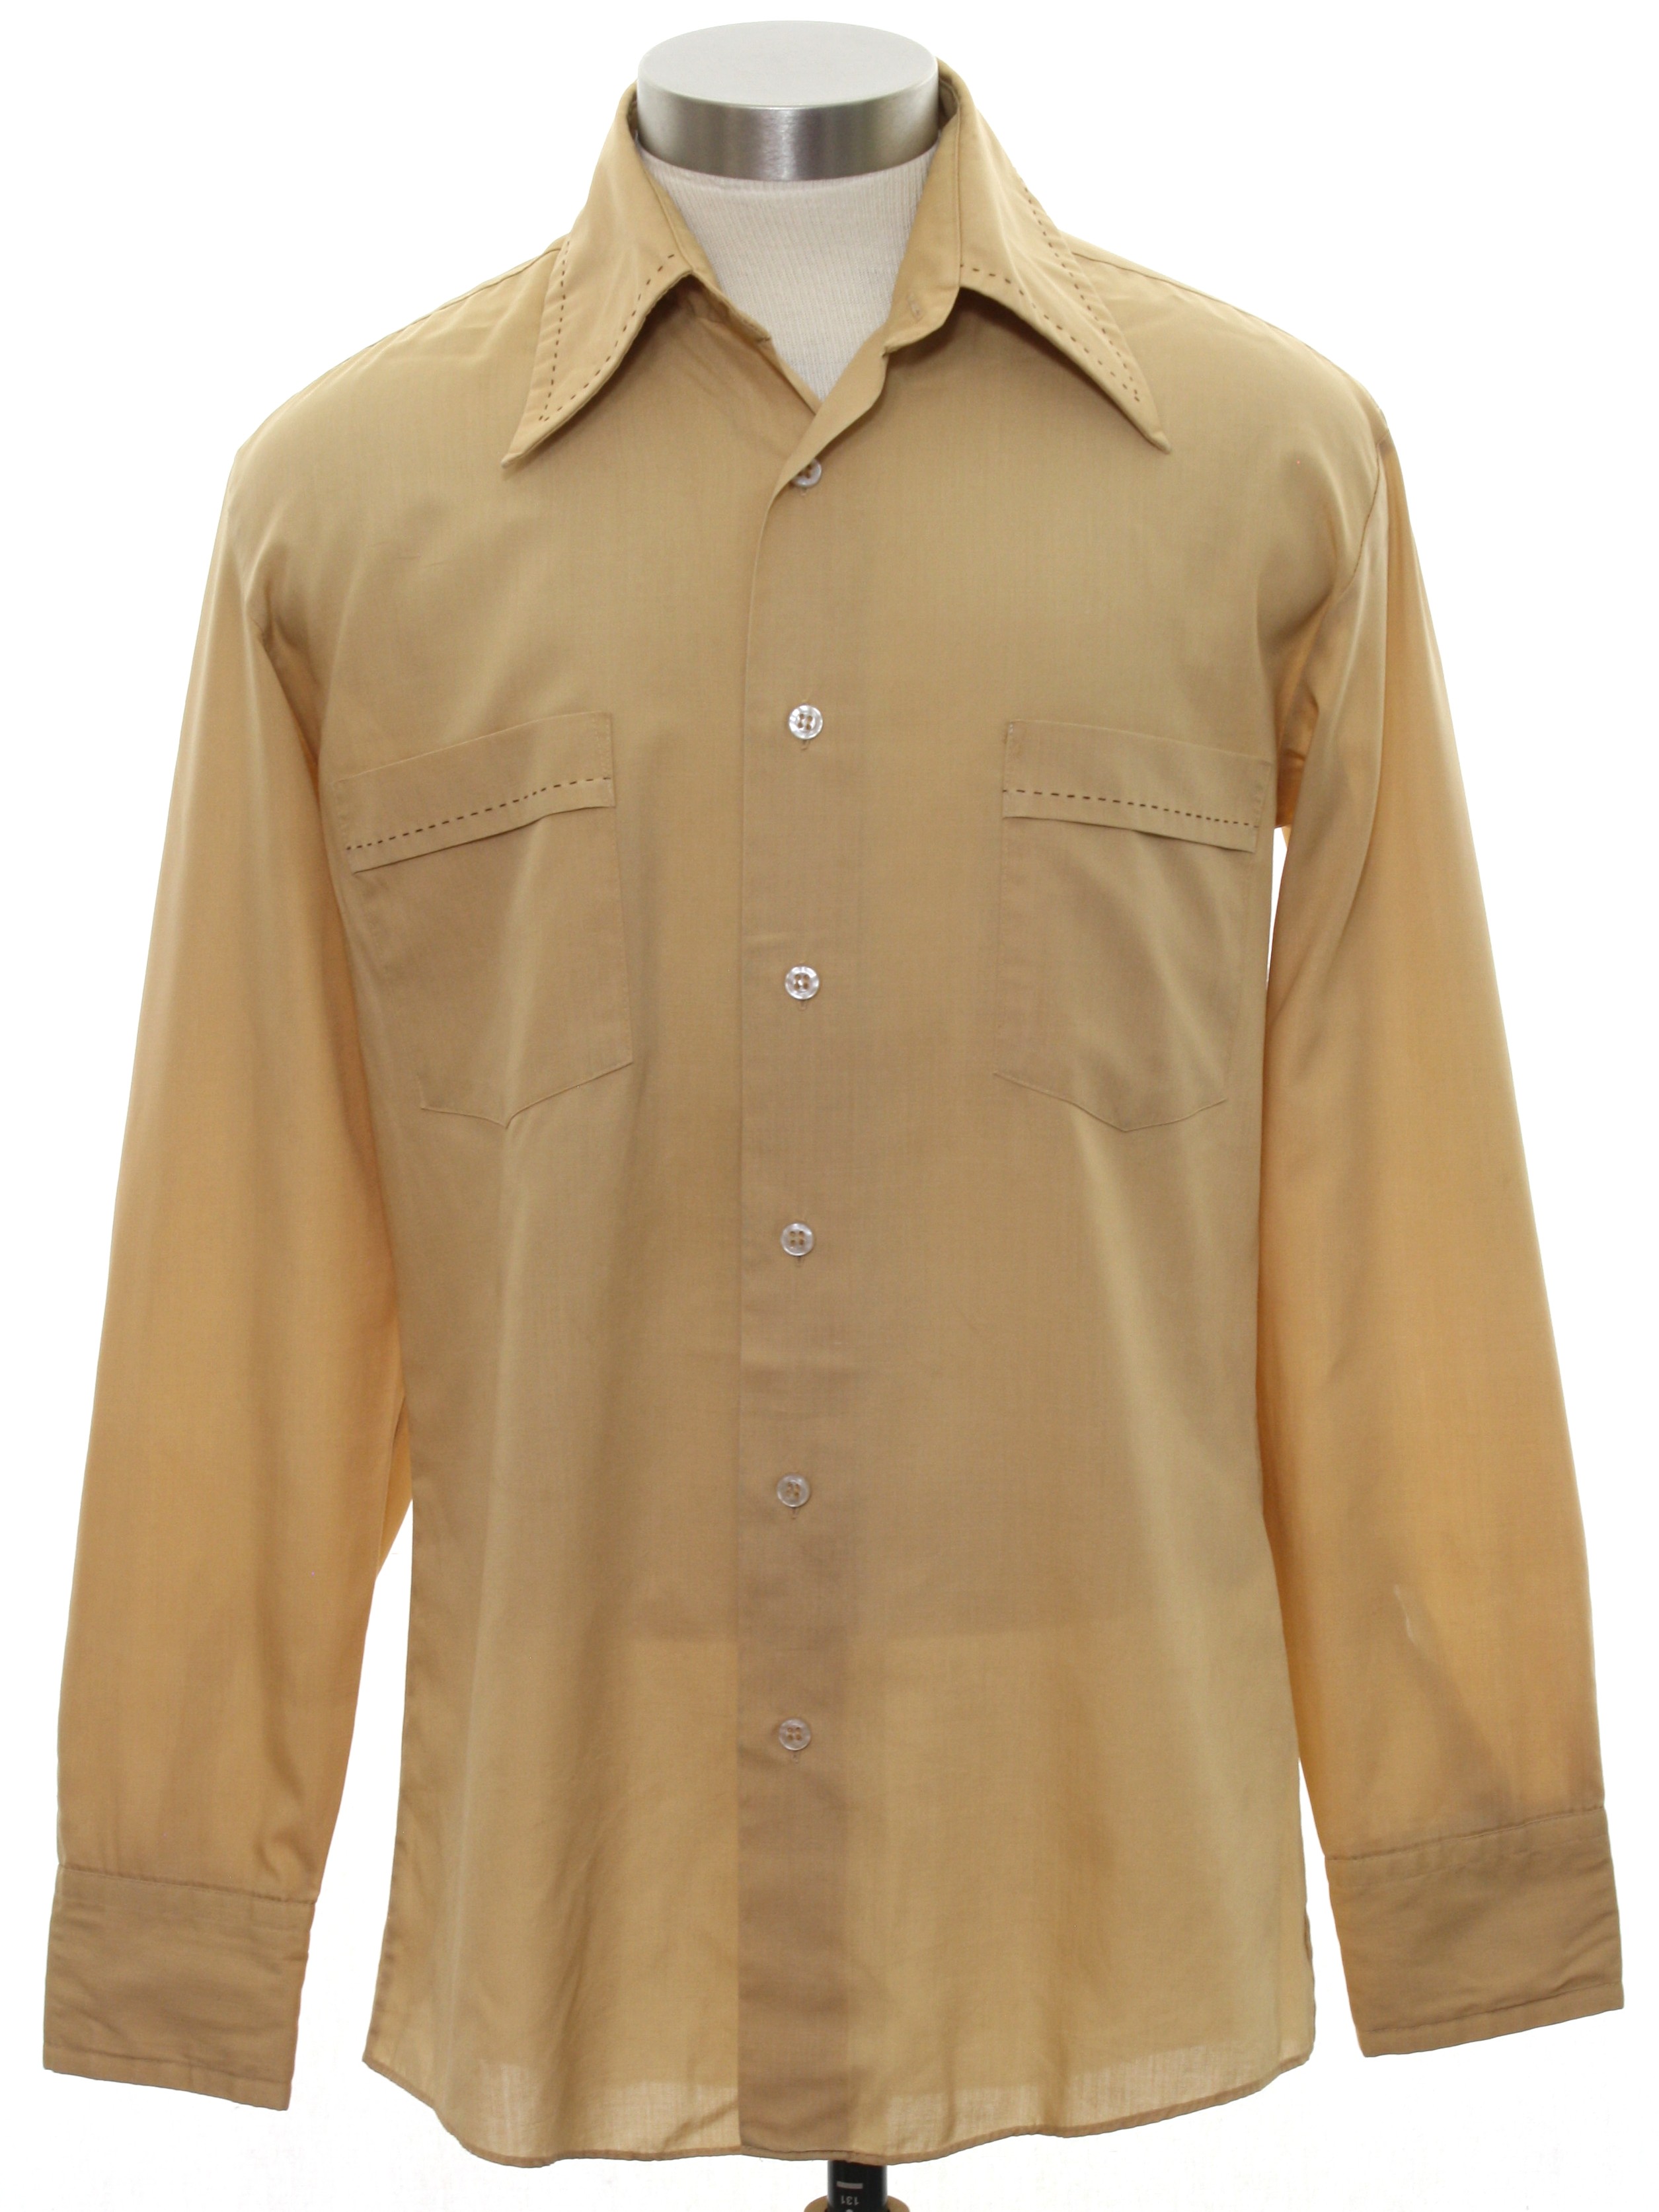 1960's Retro Shirt: Late 60s -Bud Berma- Mens camel colored background ...